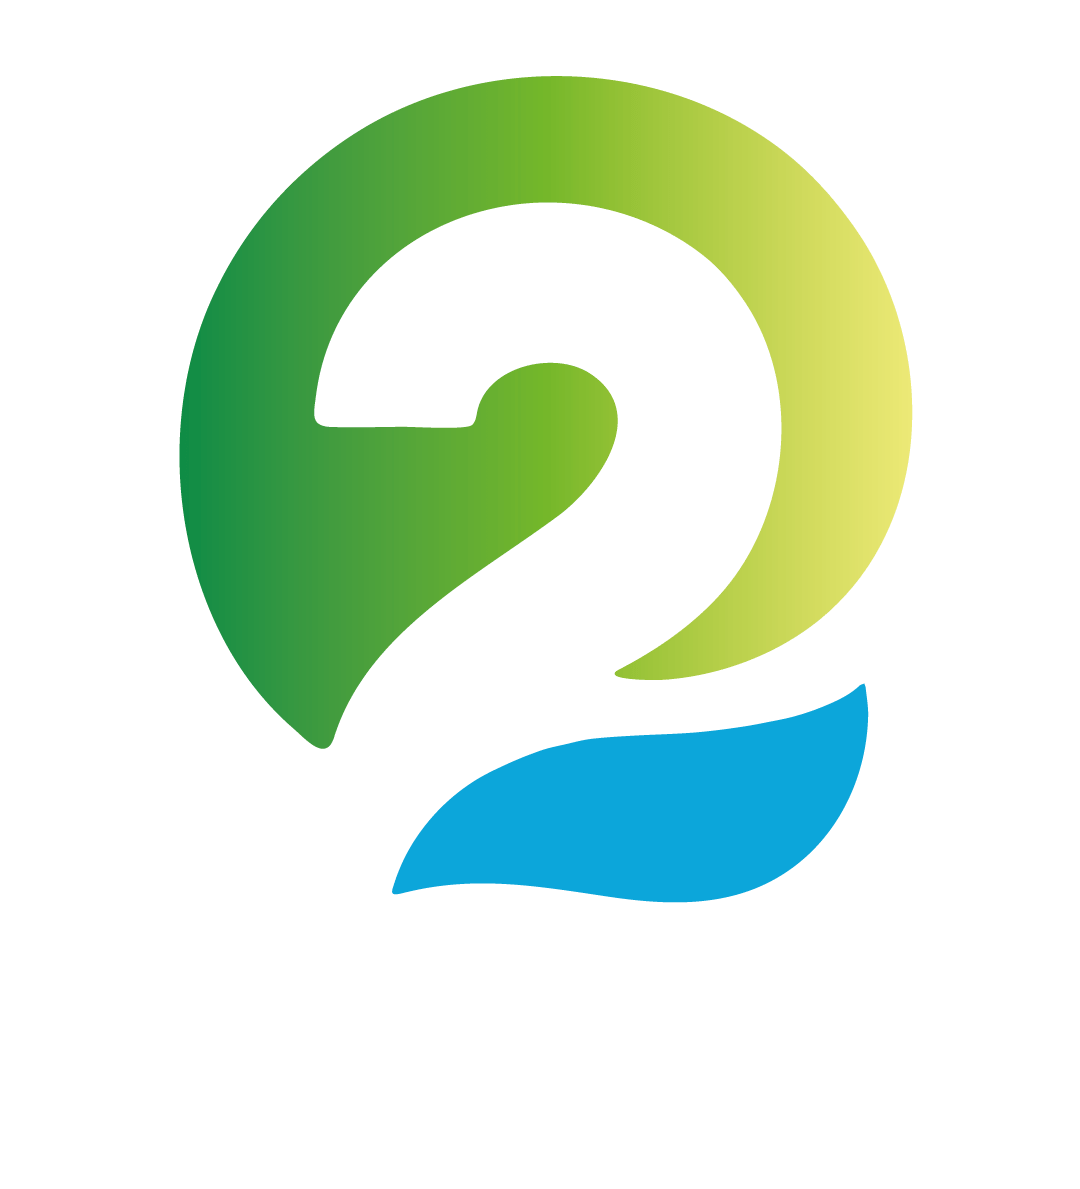 q2 logo white and grey text-02